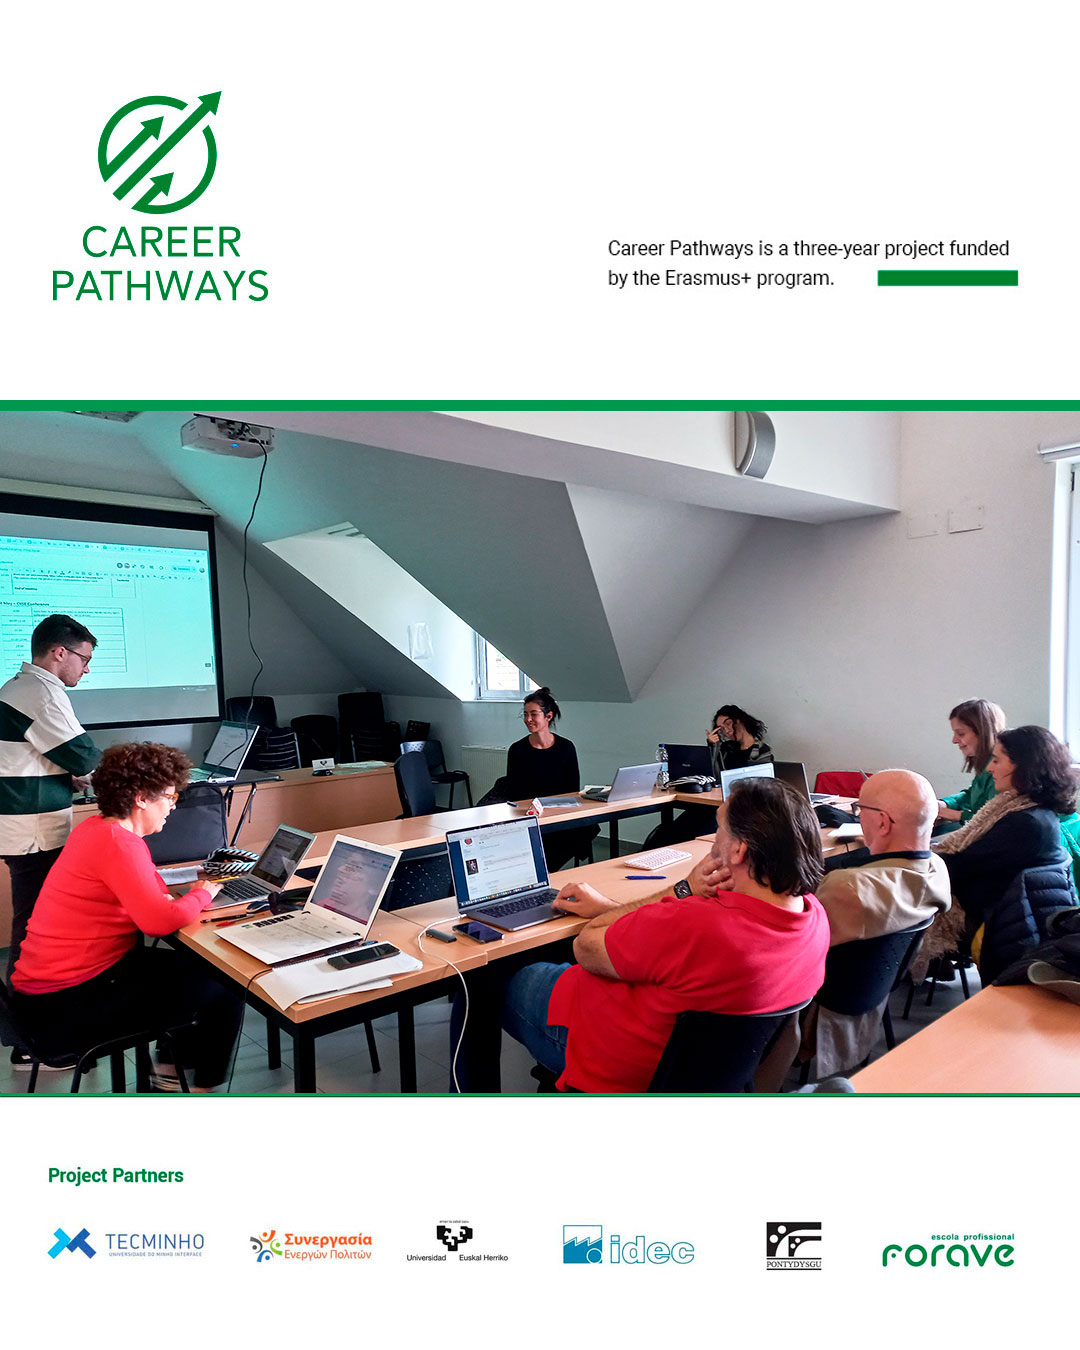 Career-pathways-project-meeting-Bilbao-012